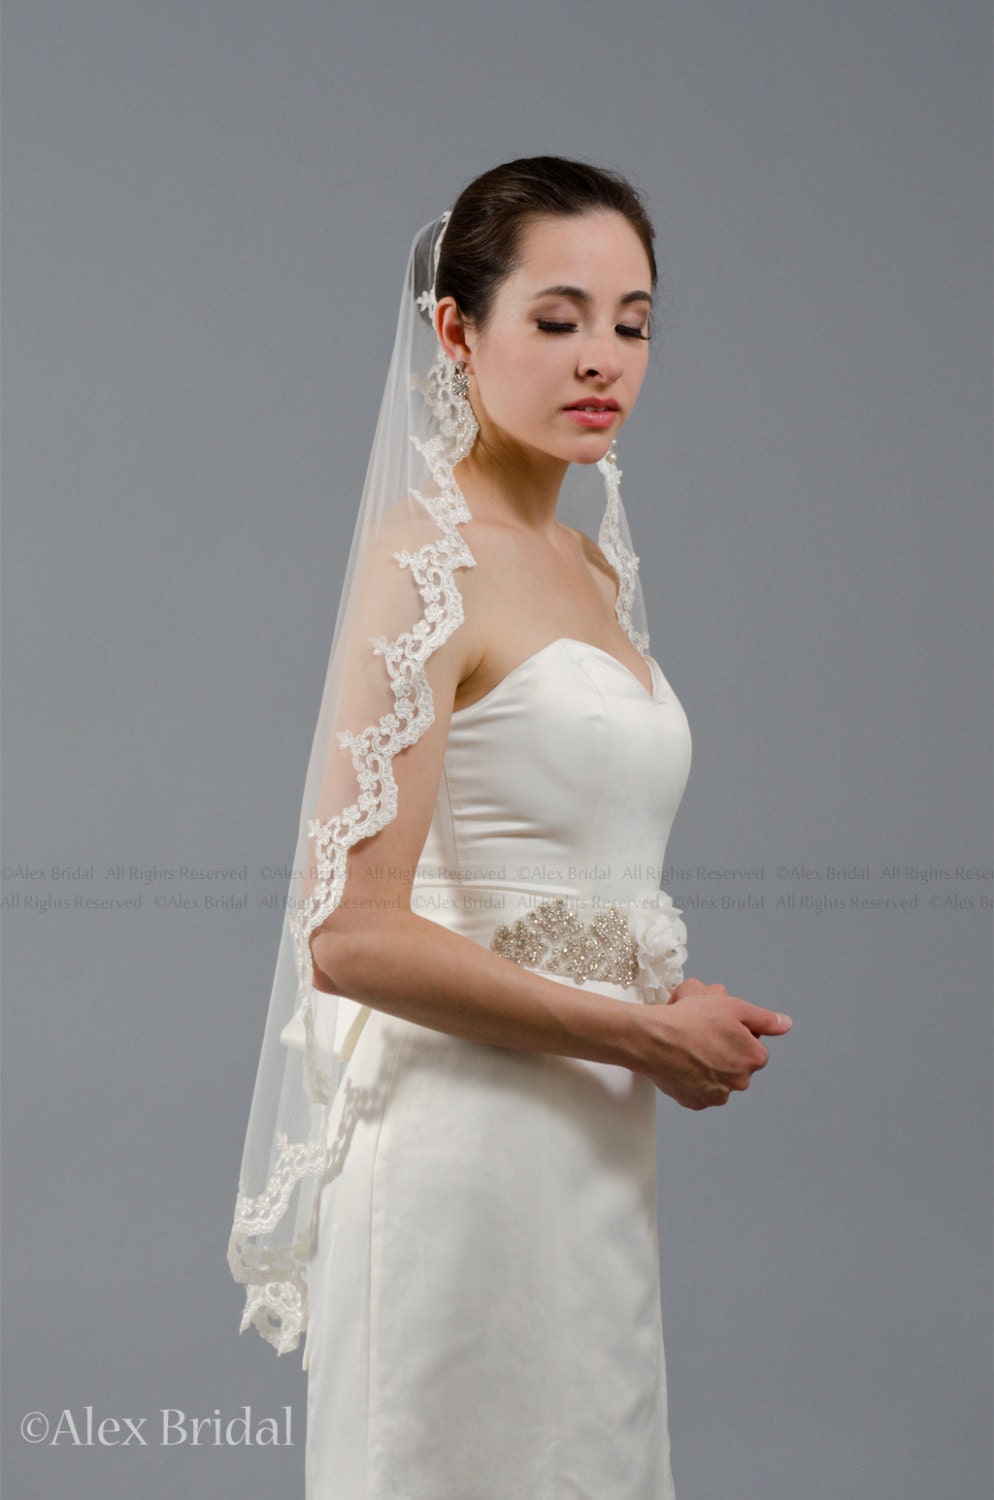 wedding veil, bridal veil, mantilla veil, fingertip length veil, alencon lace veil, wedding veil ivory, wedding veil white